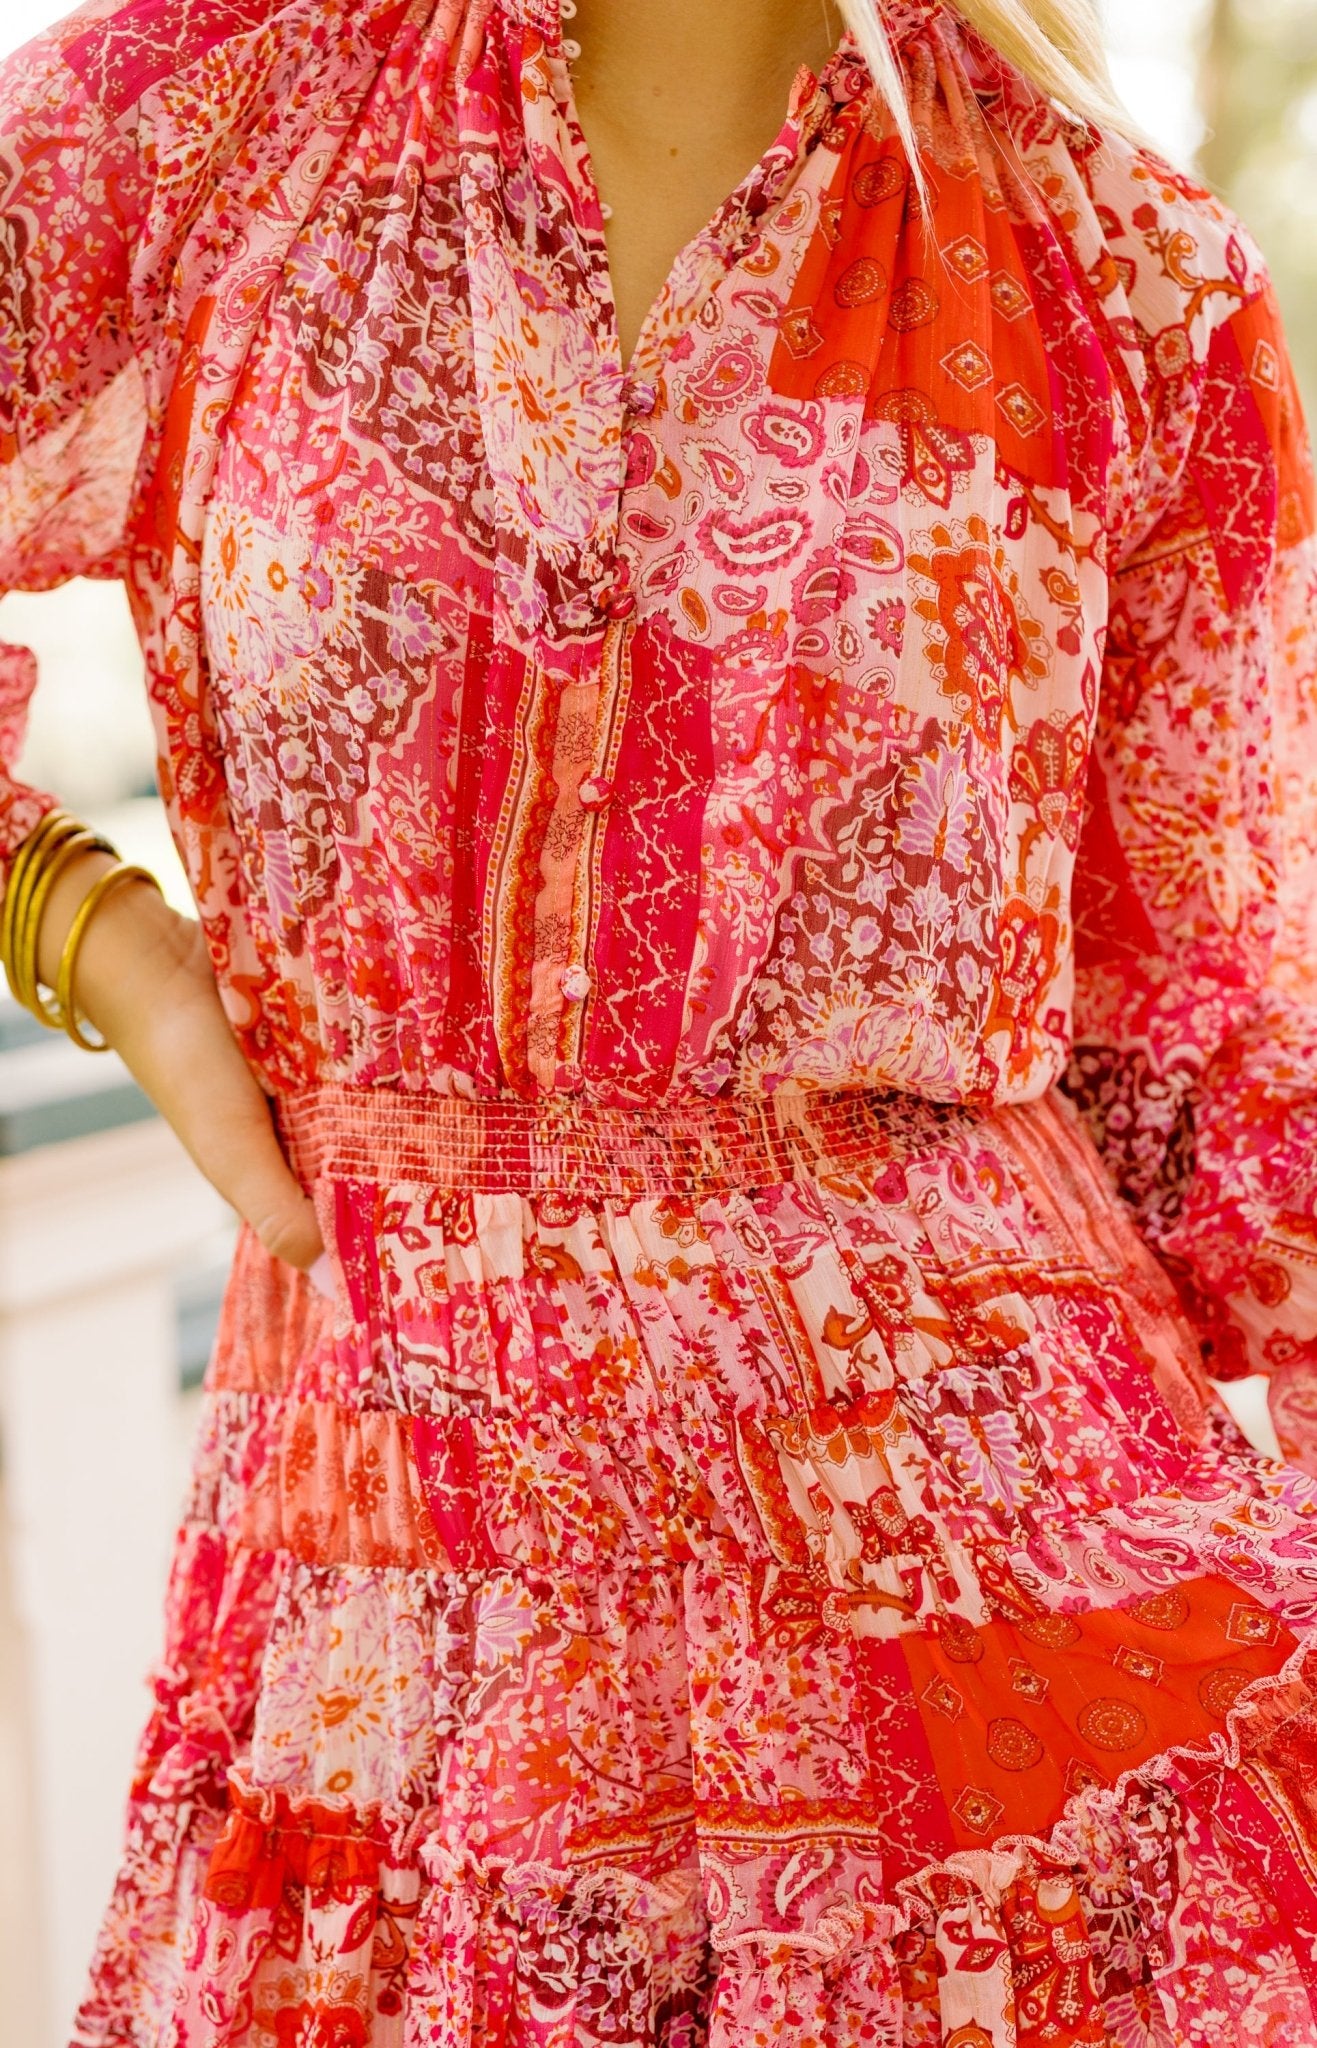 Blooming Style Mini Dress, PINK MULTI Dresses Under $100 - 26